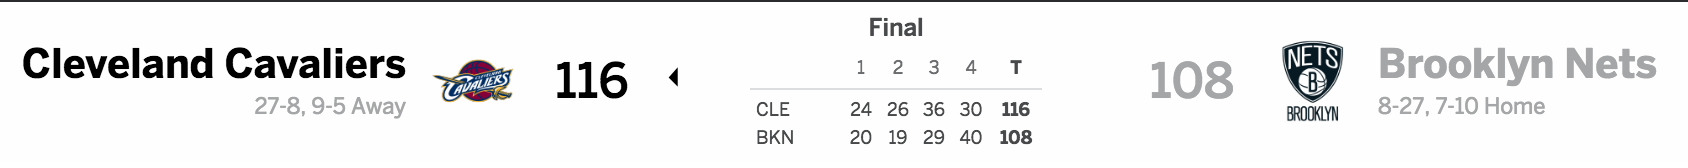 Brooklyn Nets vs. Cleveland Cavaliers 01-06-17 Score